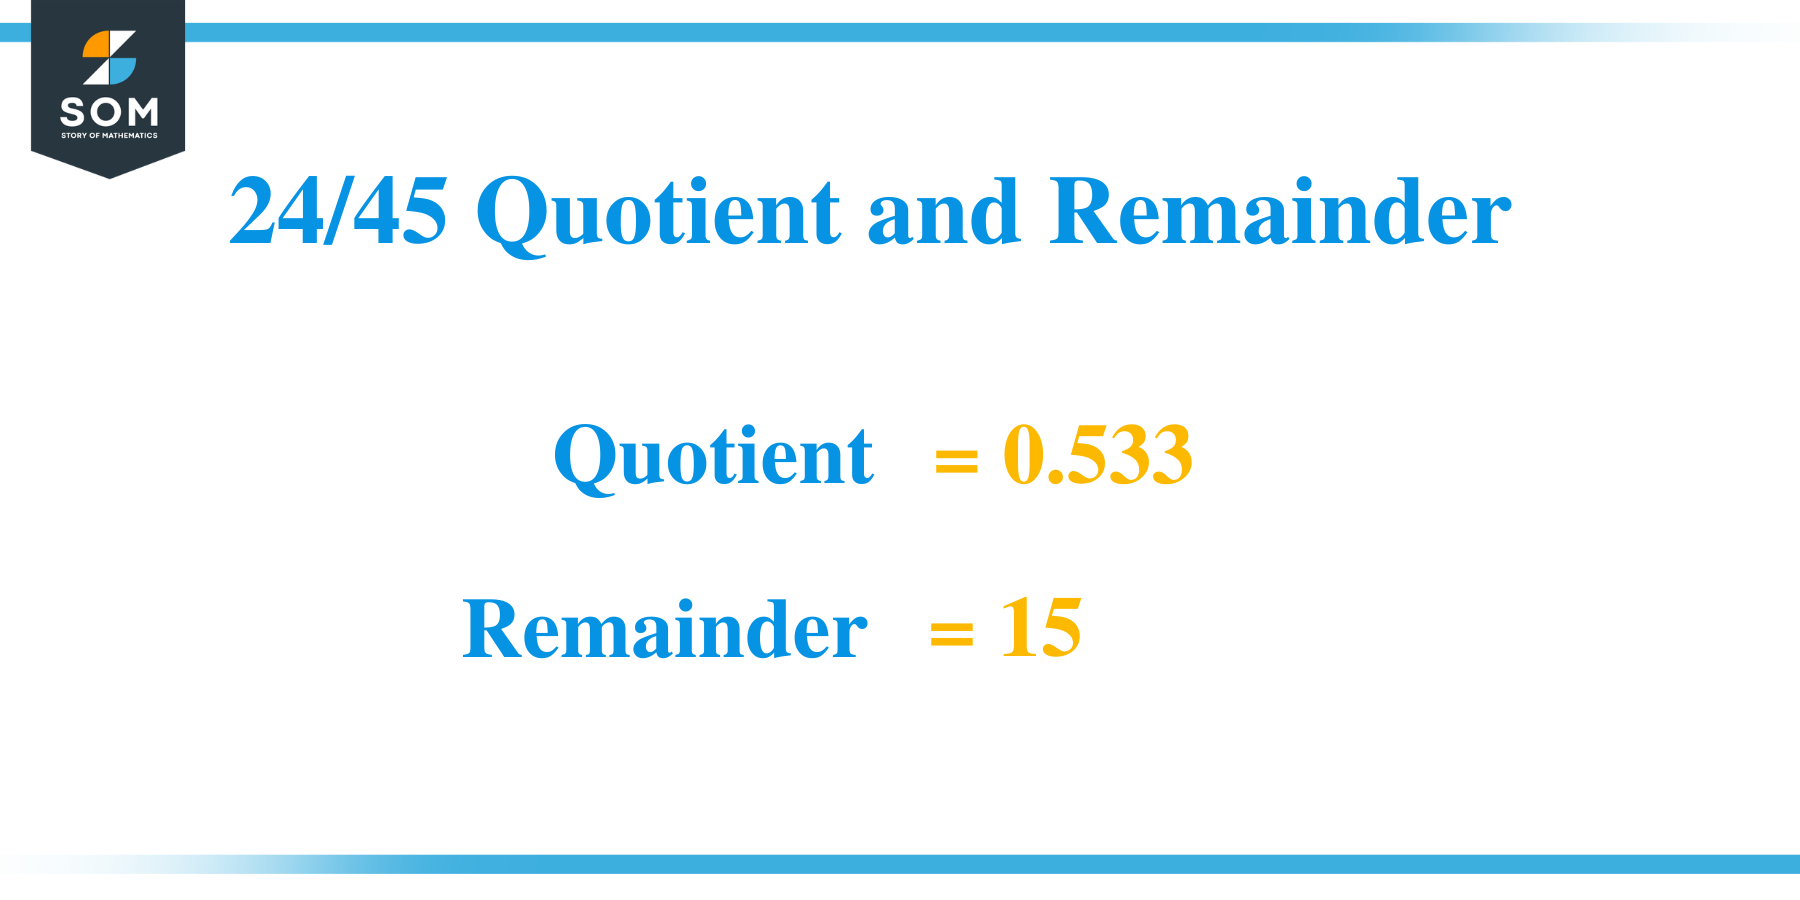 24/45 Quotient and Remainder